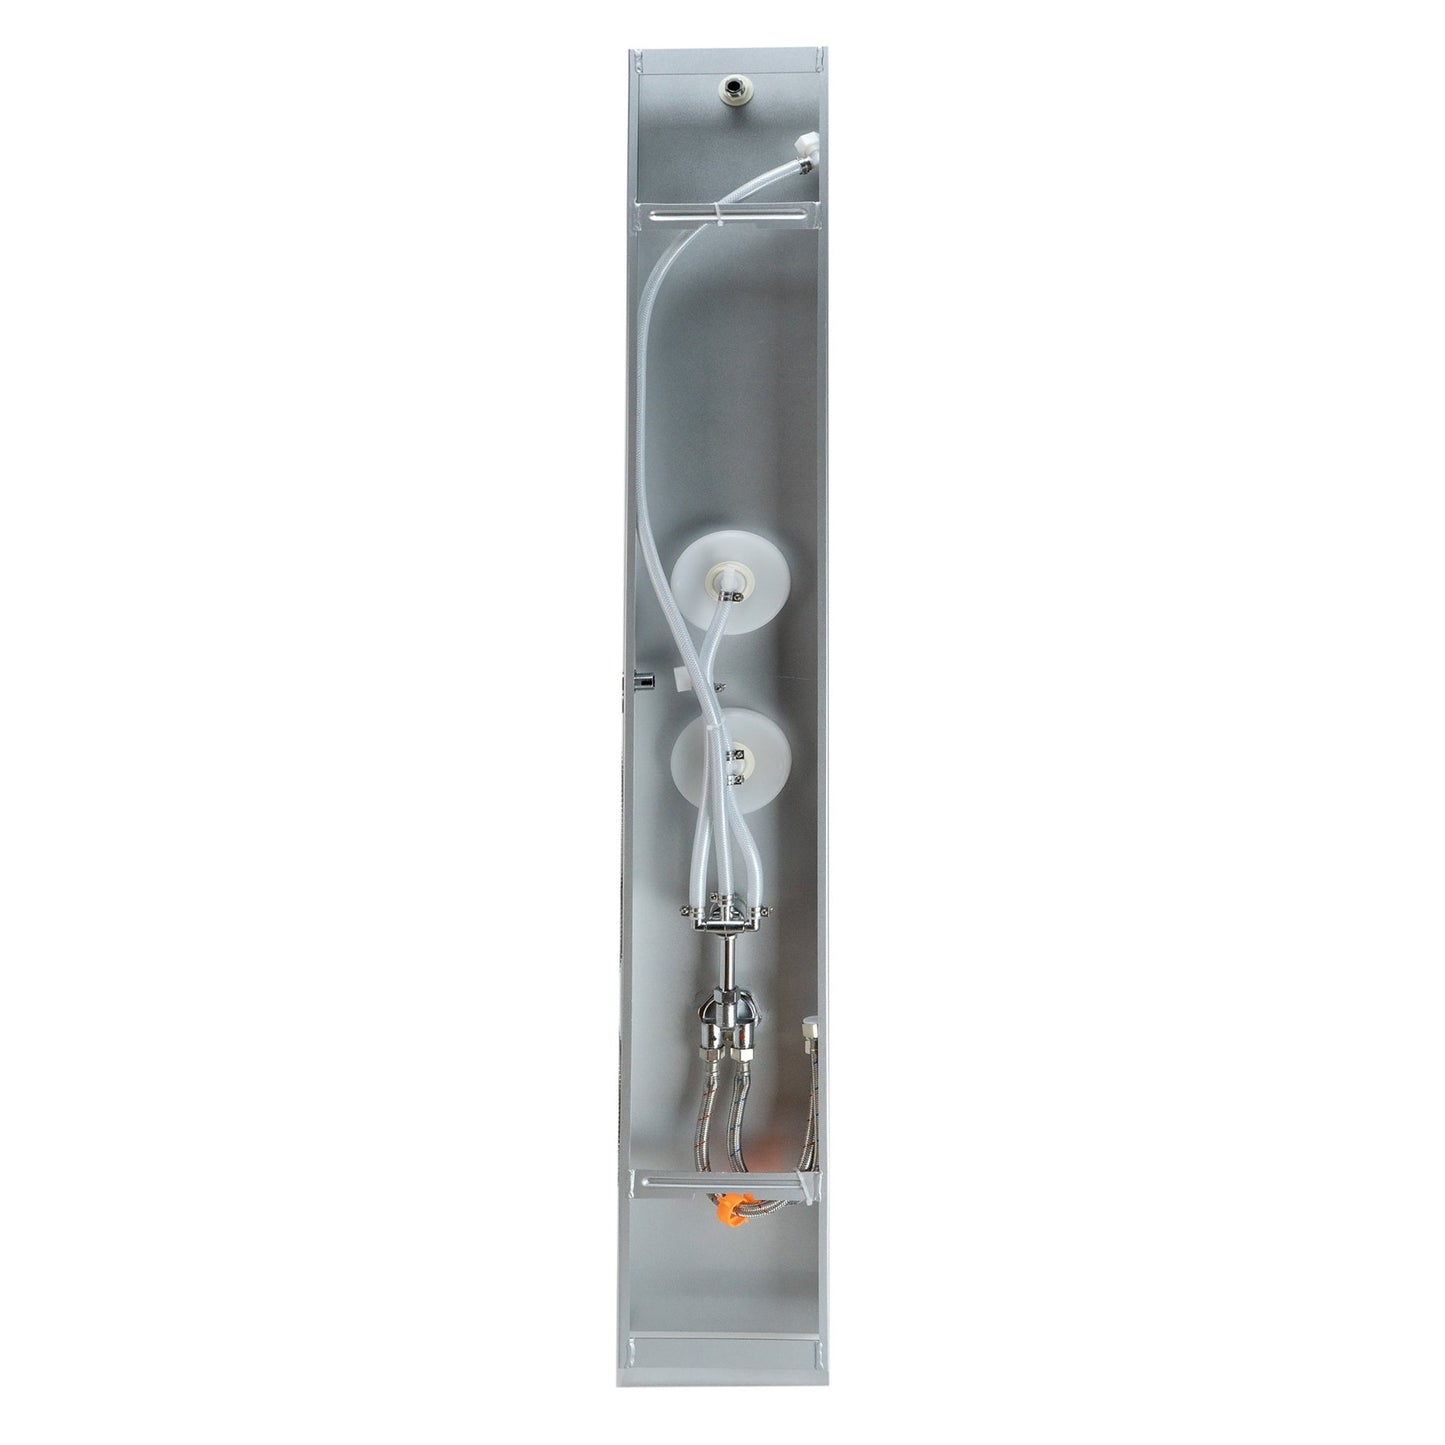 ALFI Brand ABSP50W White Glass Rectangle Shower Panel With 2 Body Sprays and Rain Shower Head